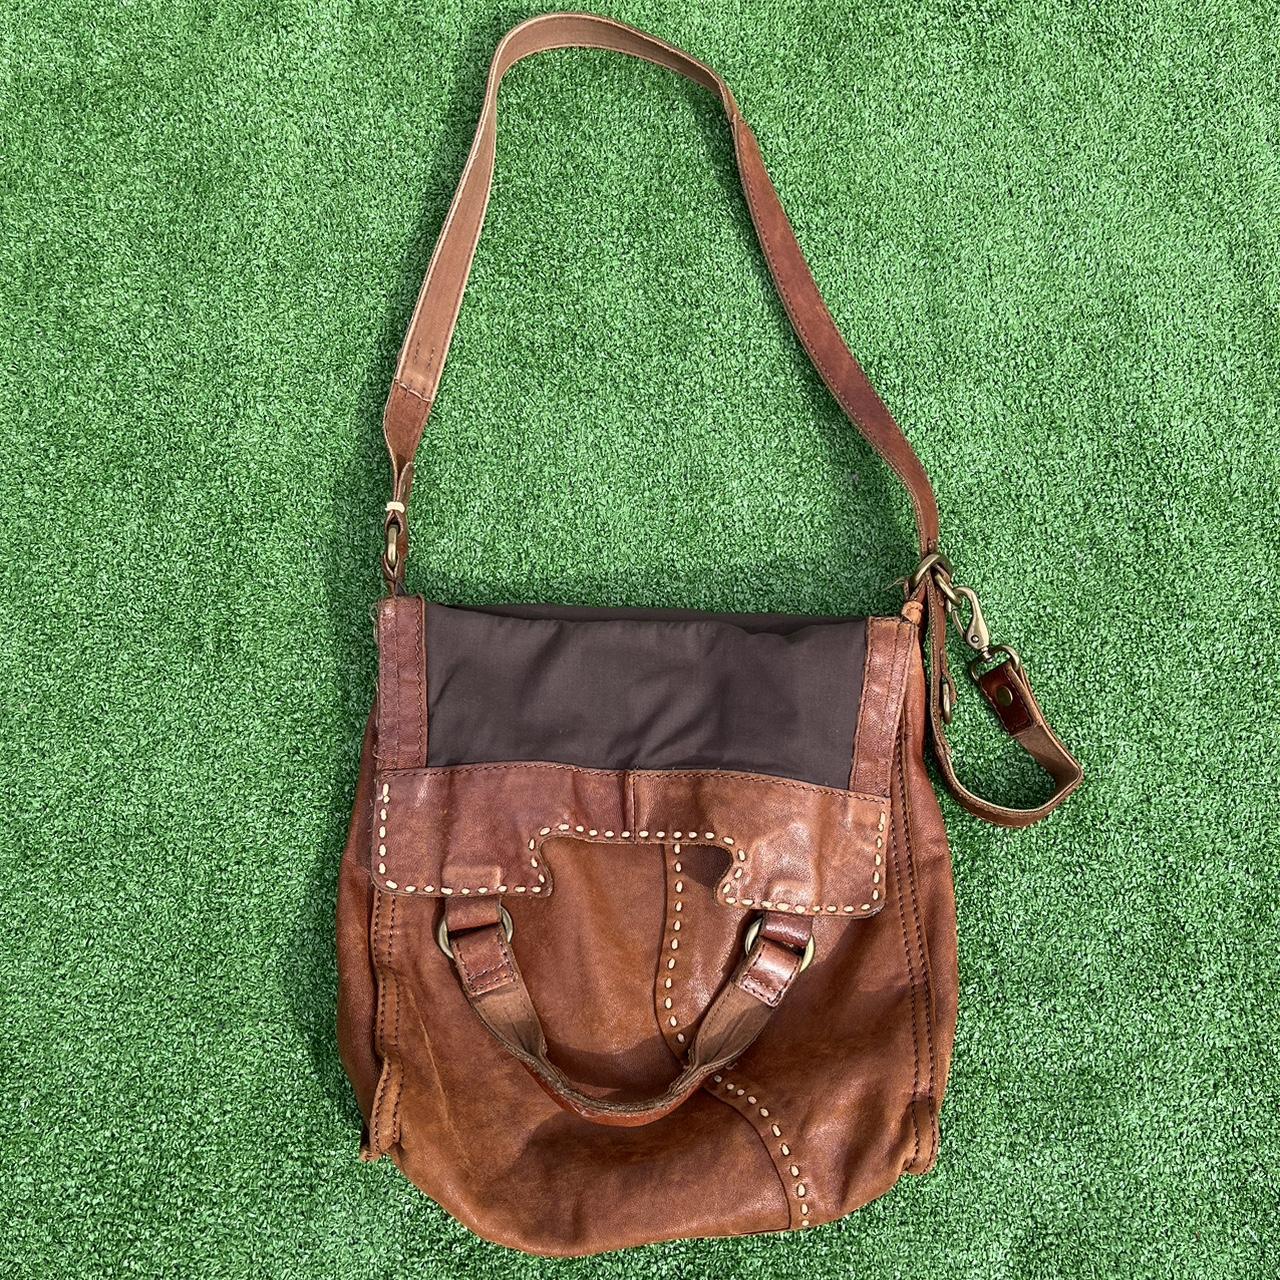 LUCKY BRAND Leather Purse PATCHWORK Shoulder Bag Patchwork Hobo | eBay